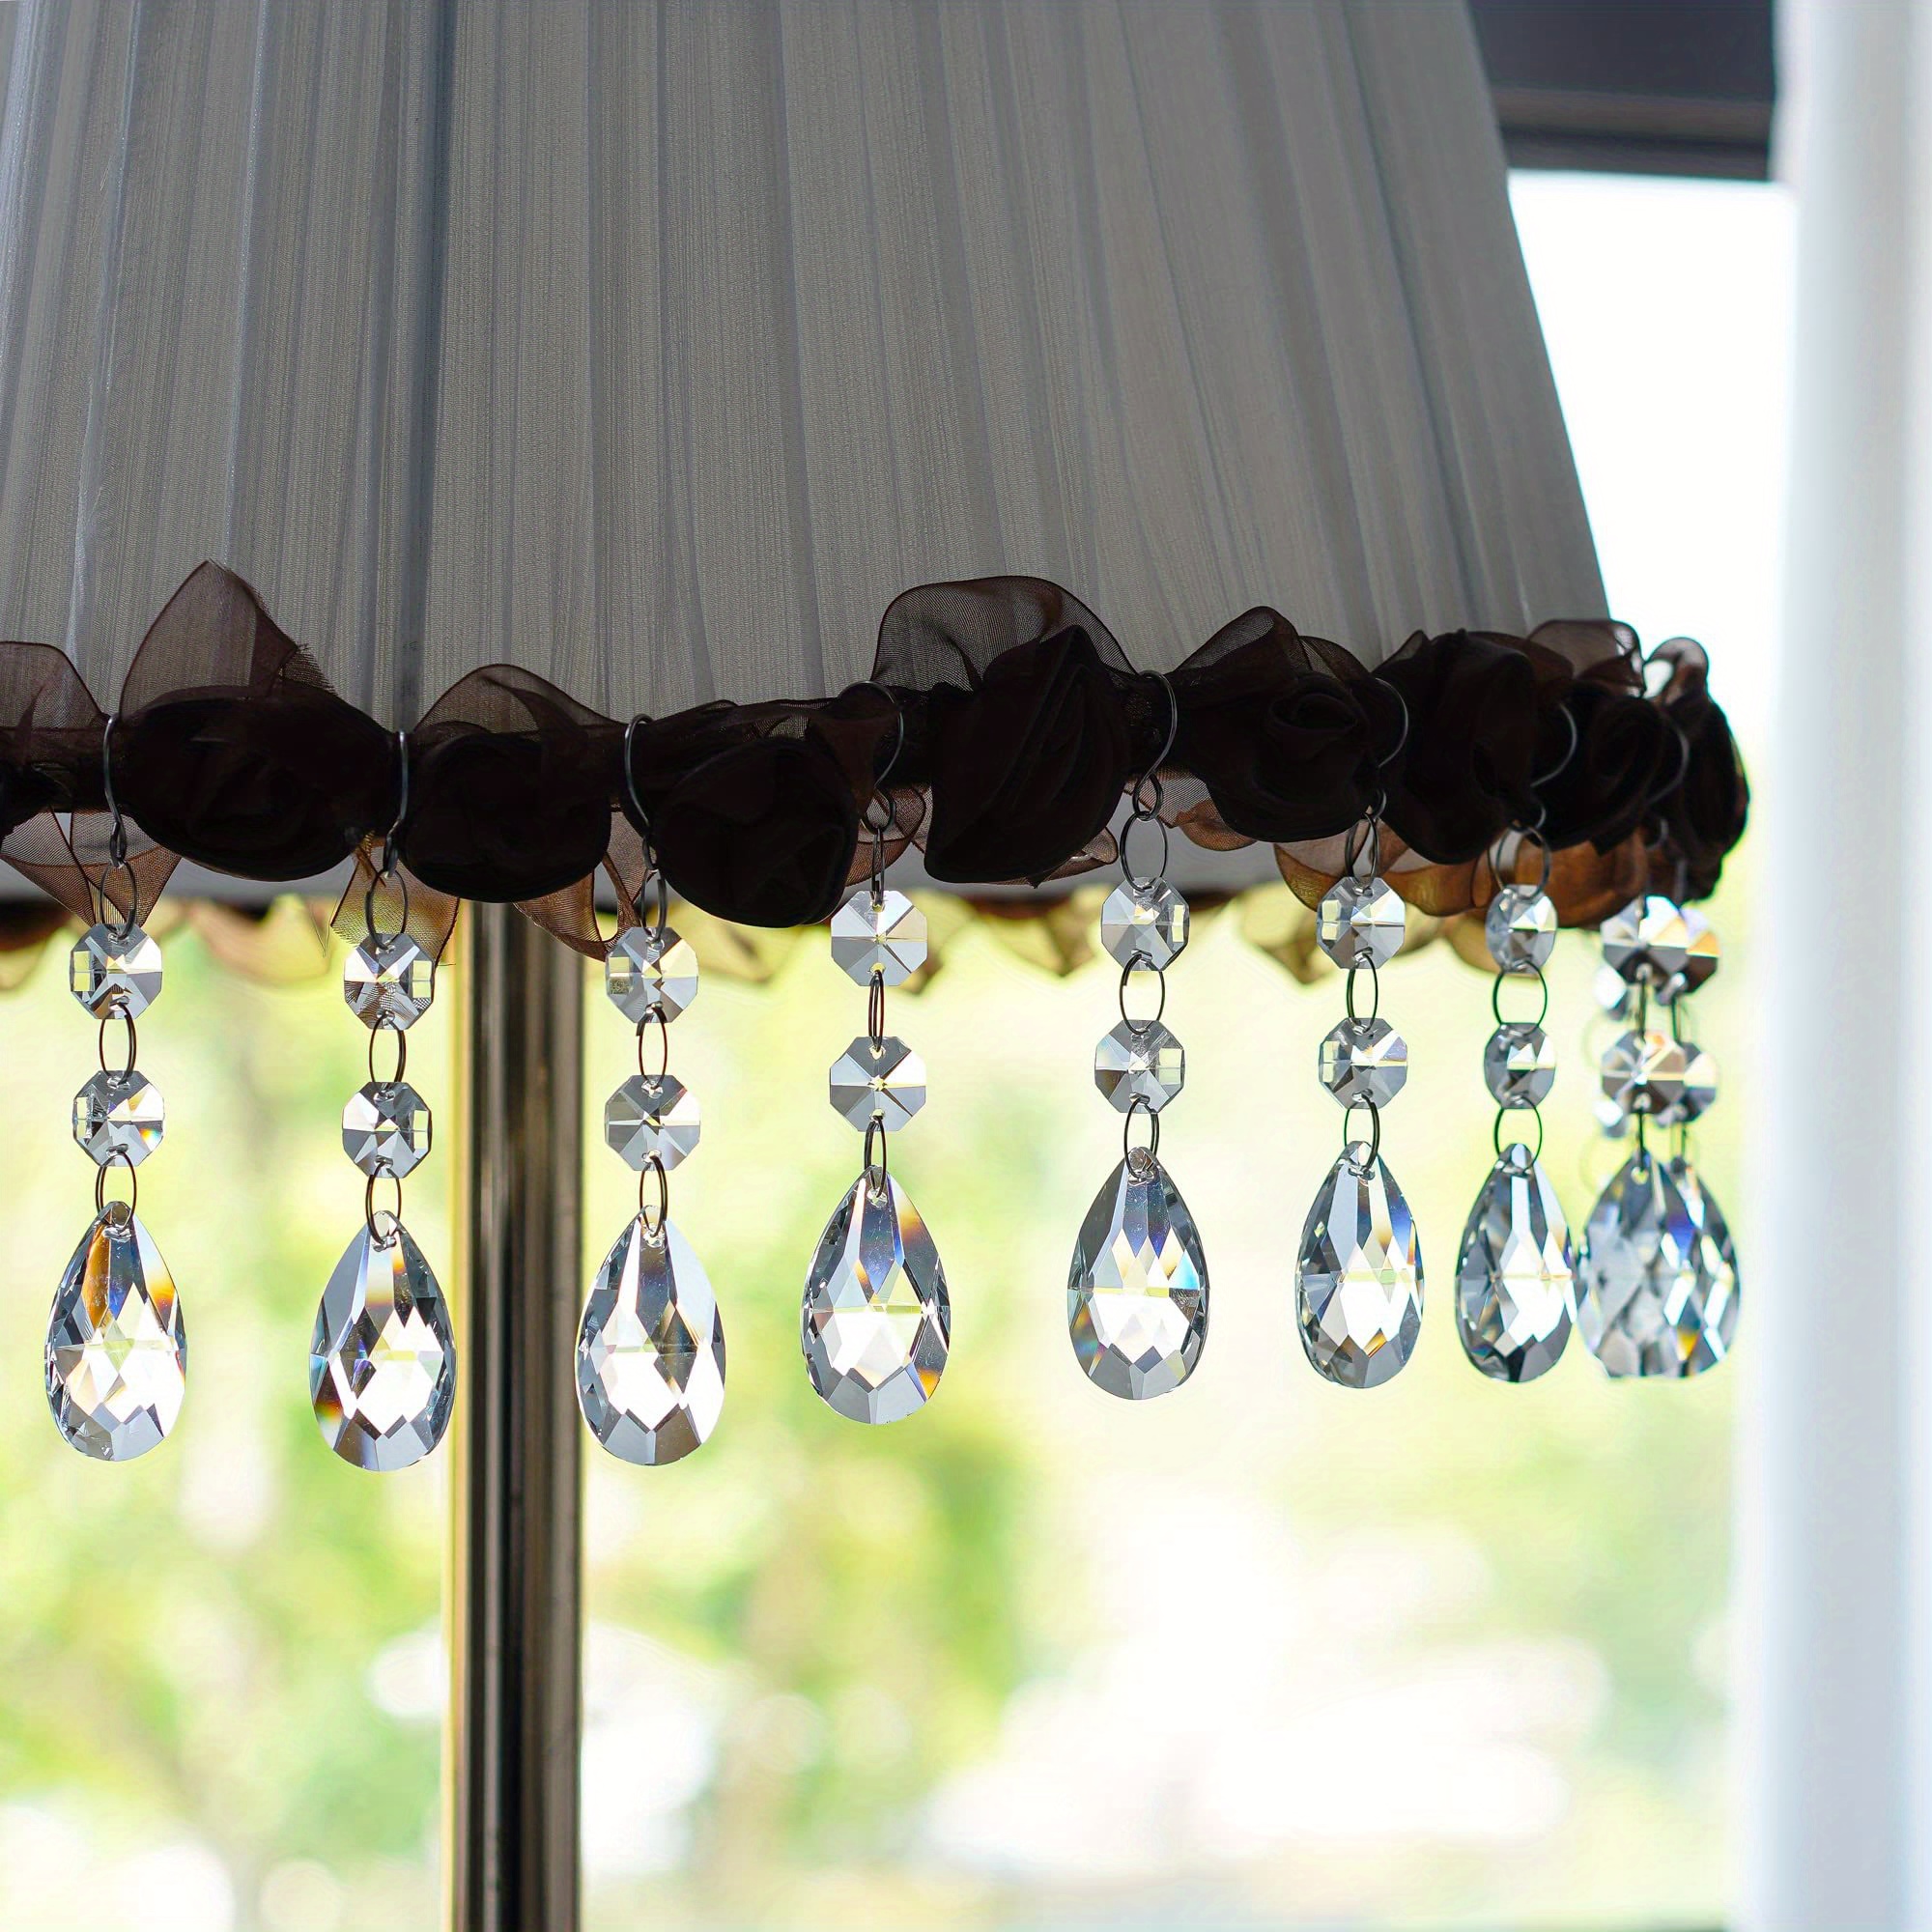 Crystal Ball Prism Pendant Glass Chandelier Hanging Ghana